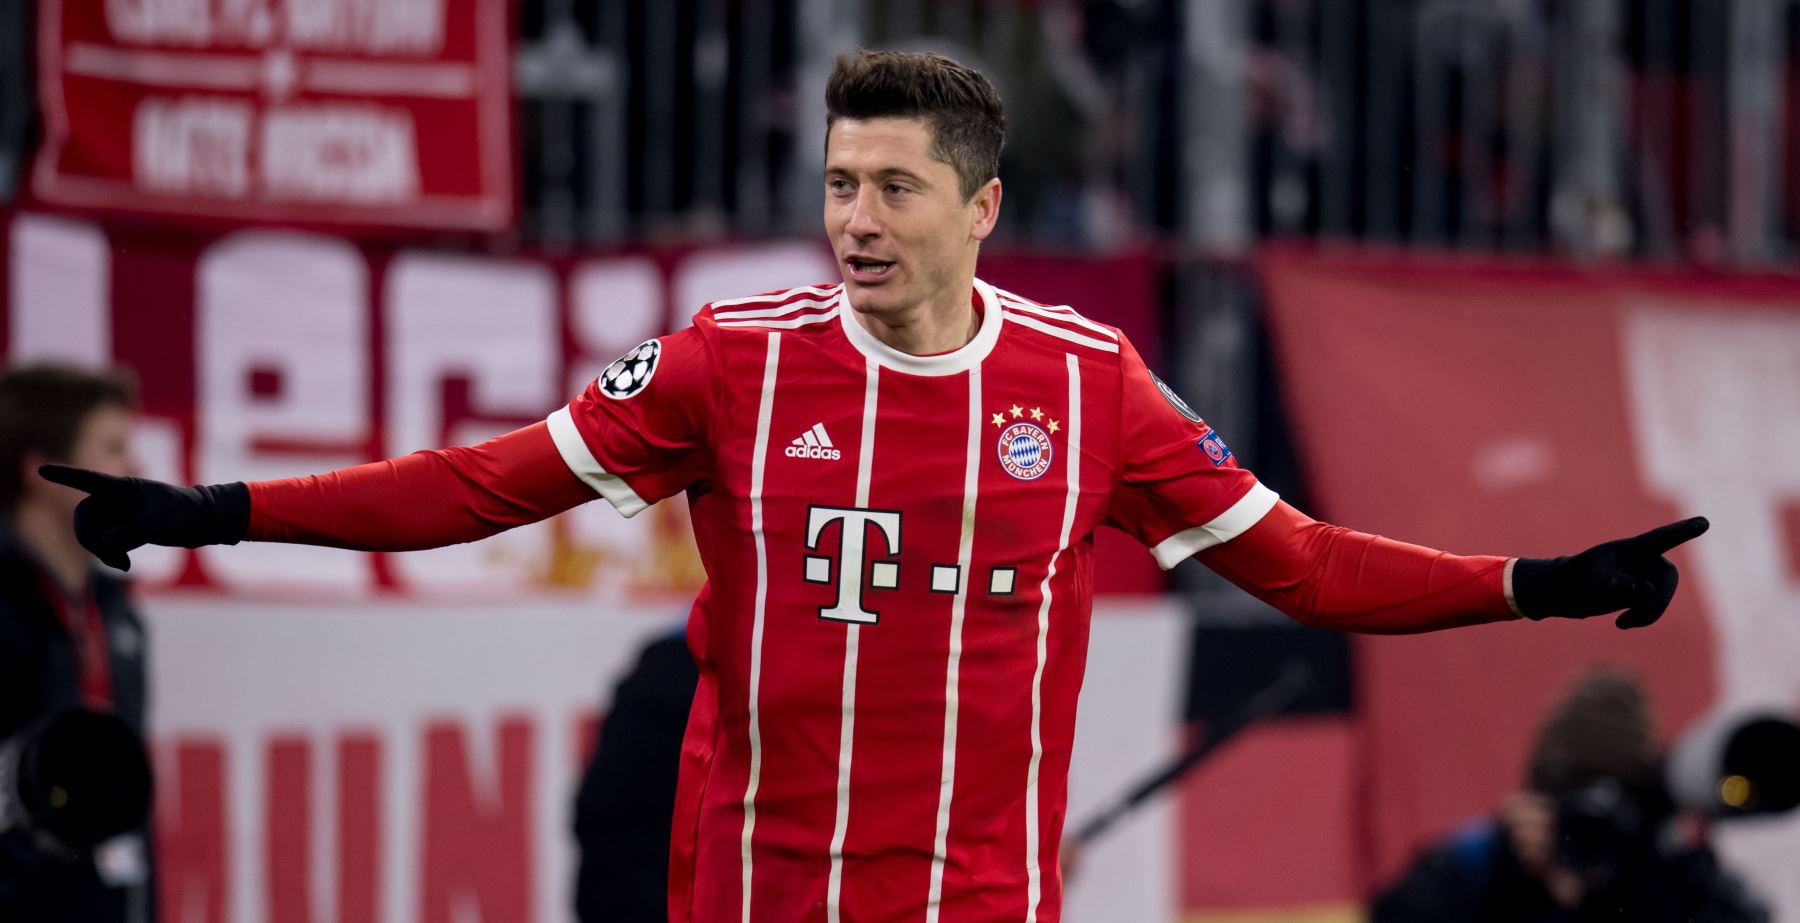 Delantero del Bayern Lewandowski celebra el gol. Foto: AFP